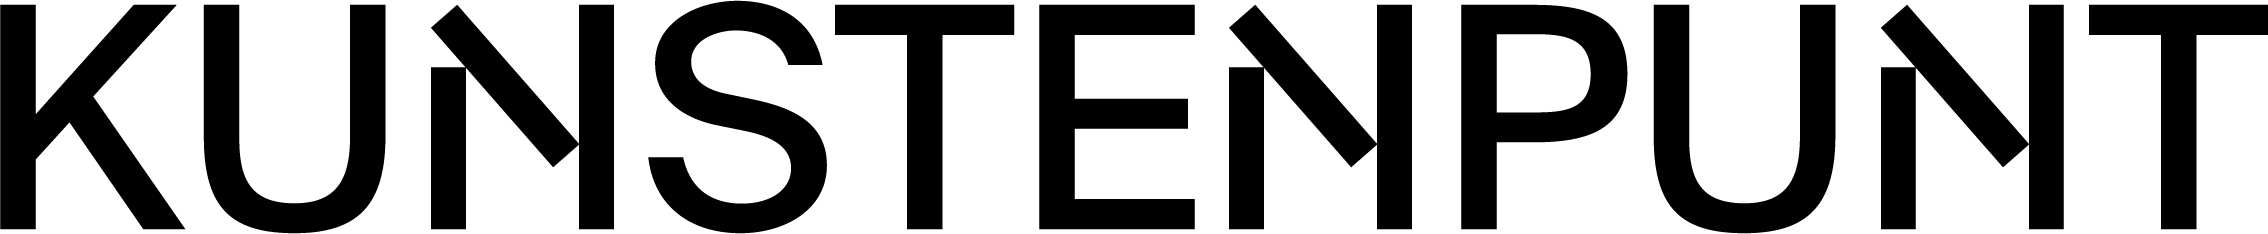 Kunstenpunt-logo-rgb-black